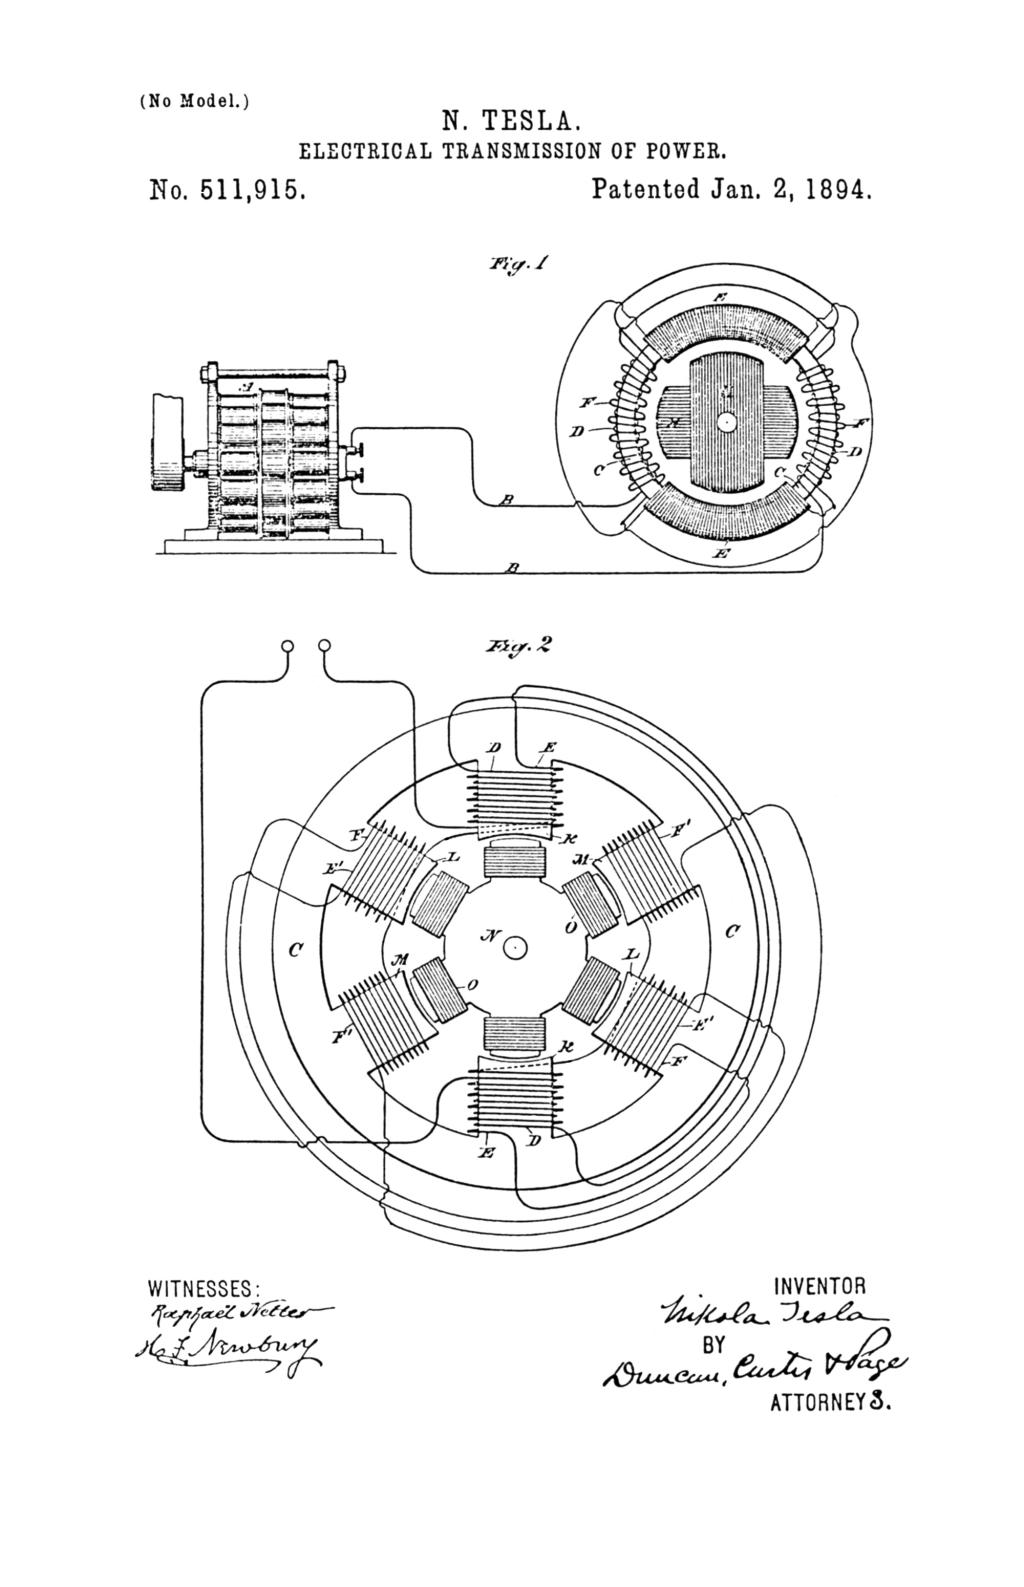 Nikola Tesla U.S. Patent 511,915 - Electrical Transmission of Power - Image 1